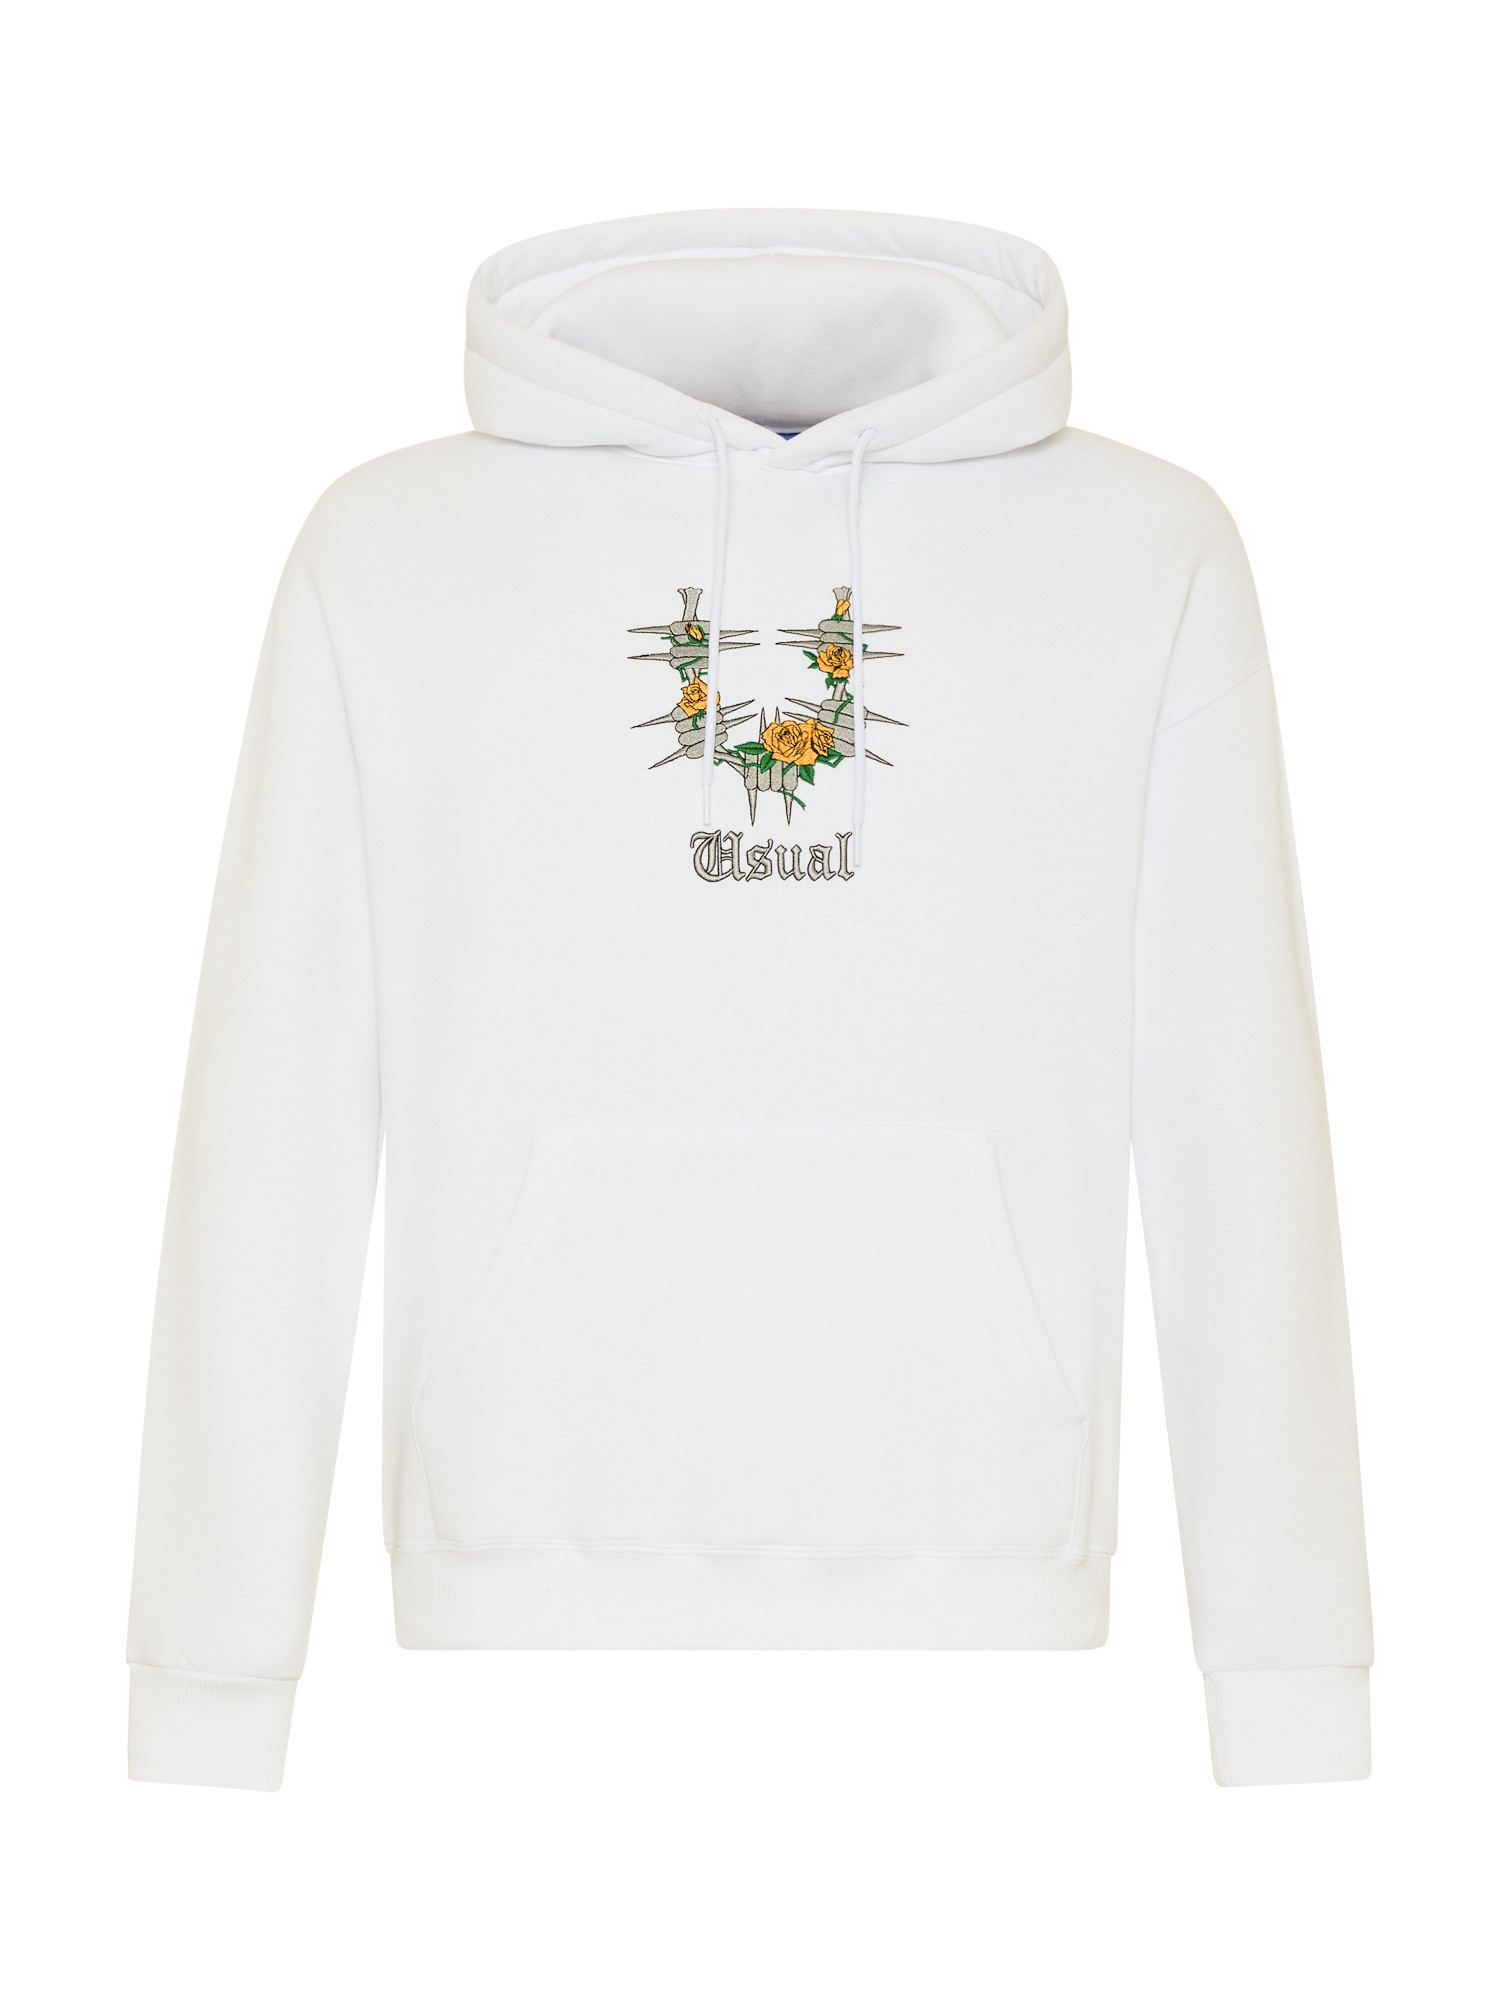 Usual - Barrio Hooded Sweatshirt, White, large image number 0